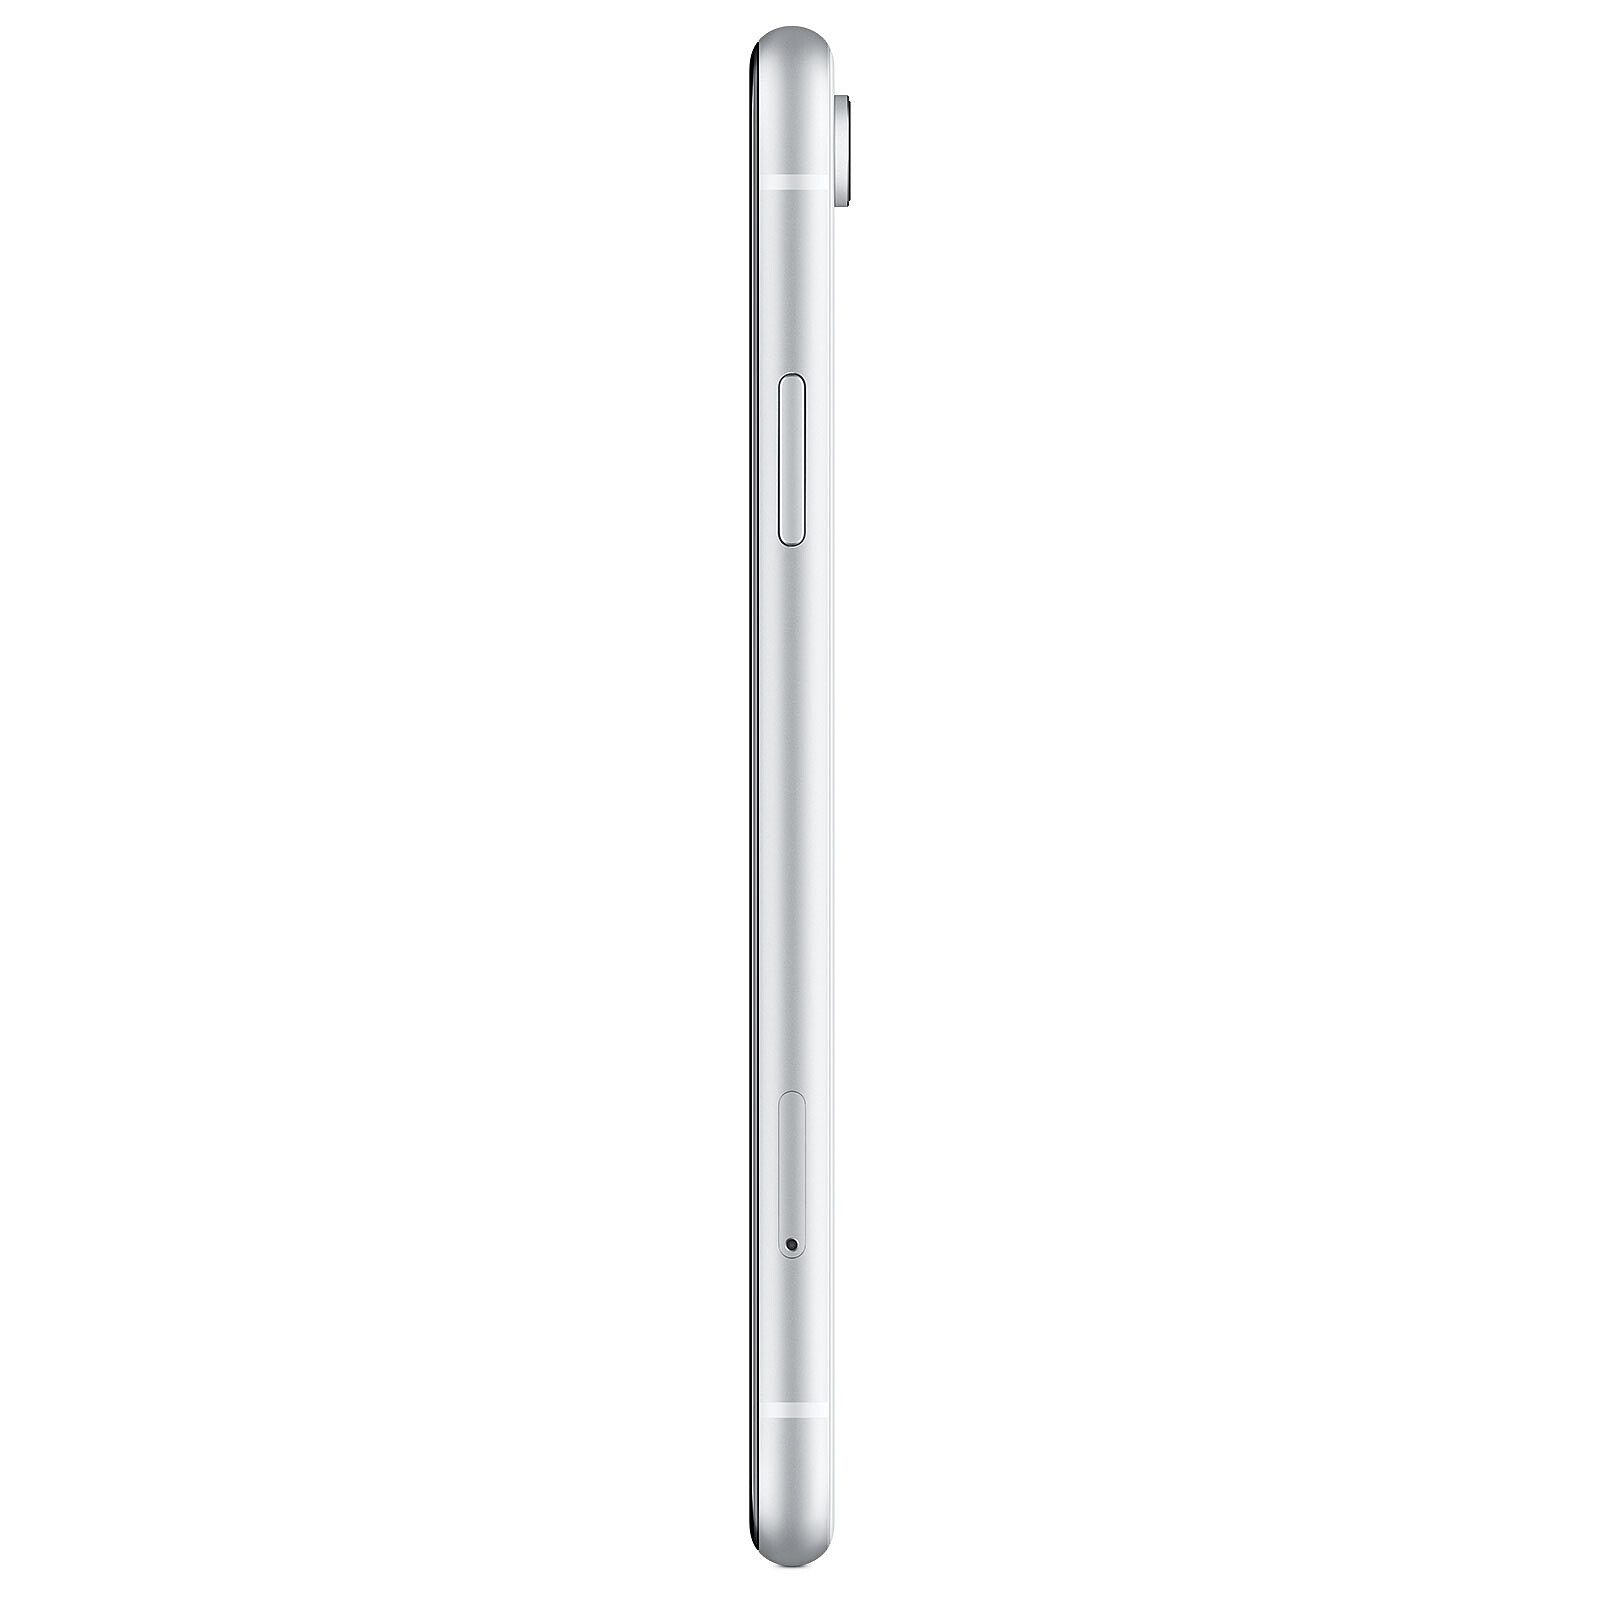 Apple iPhone XR 64 Go corail reconditionné